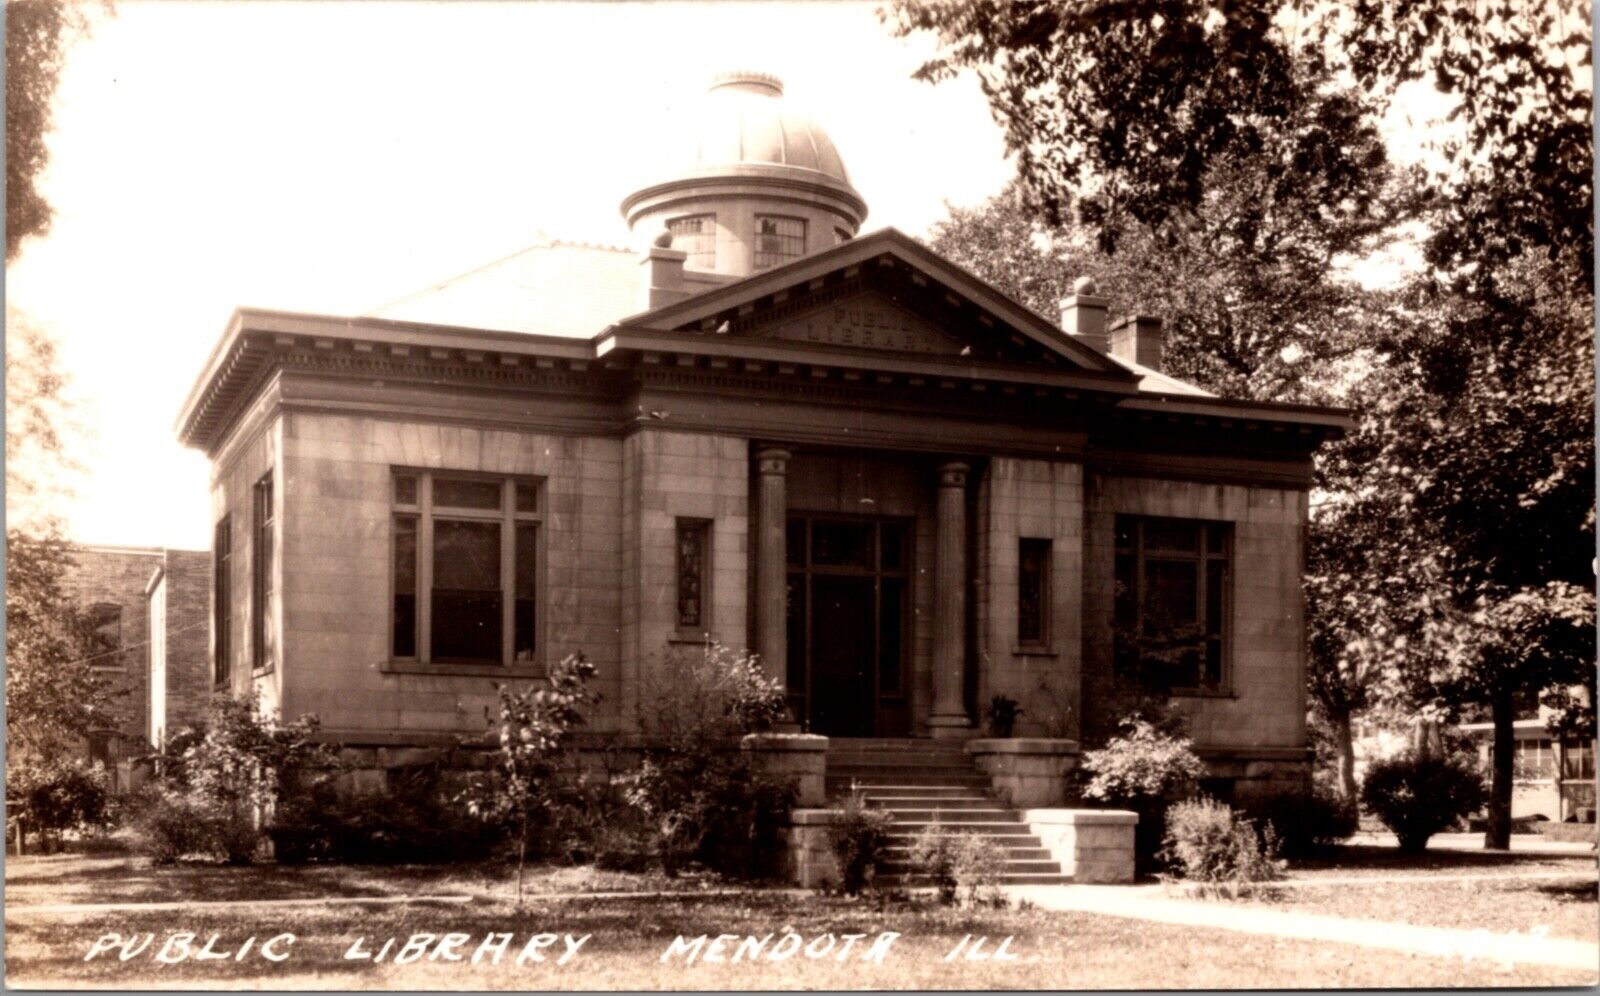 Real Photo Postcard Public Library in Mendota, Illinois